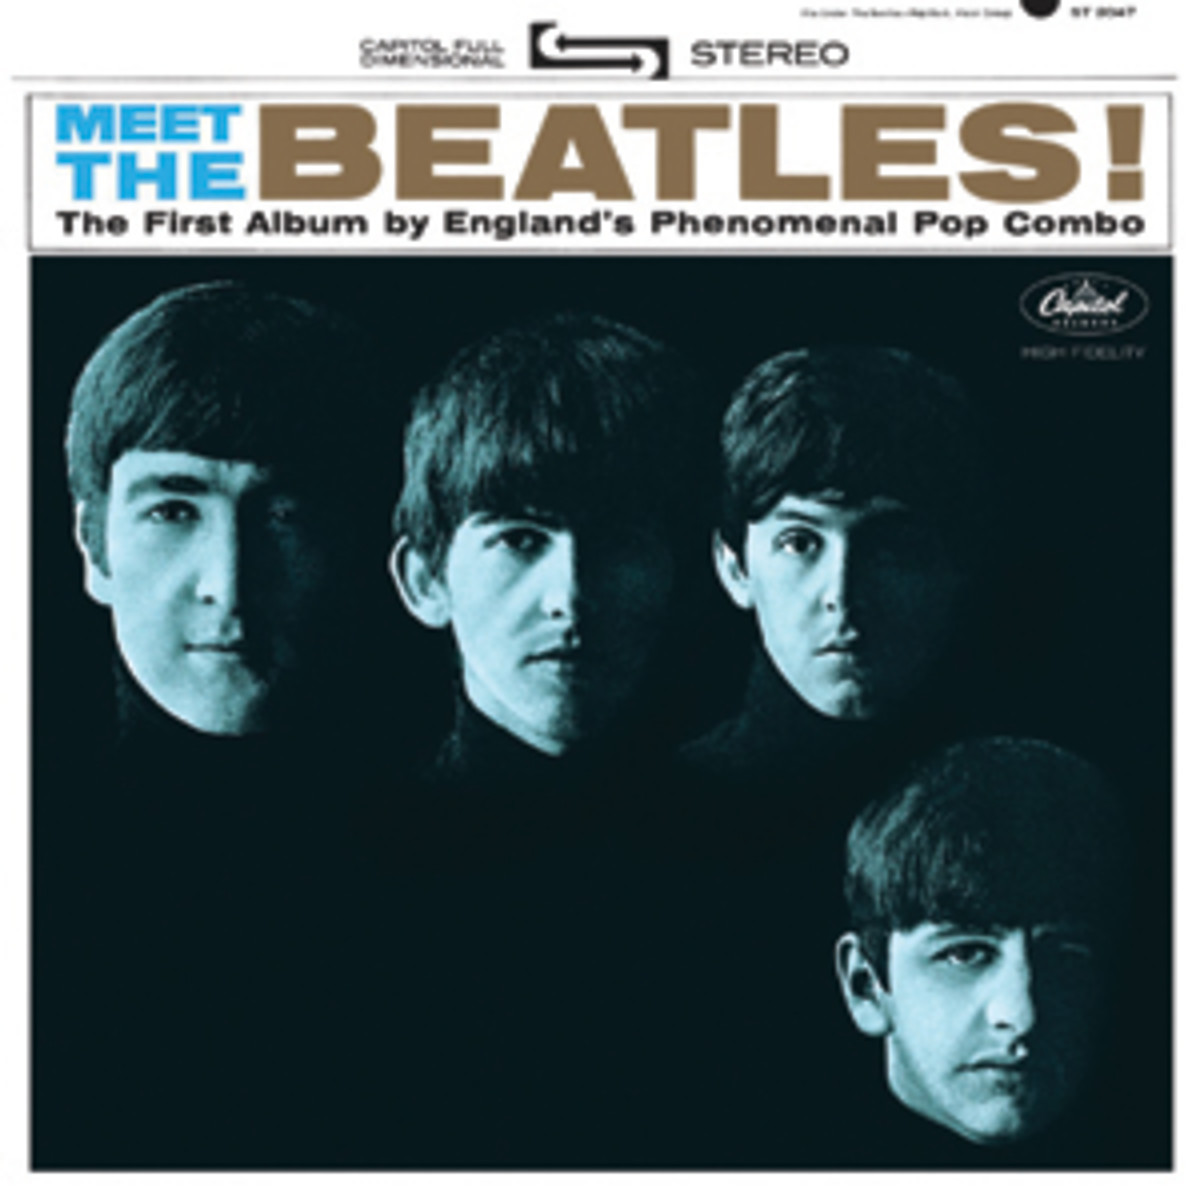 The Beatles, Meet The Beatles